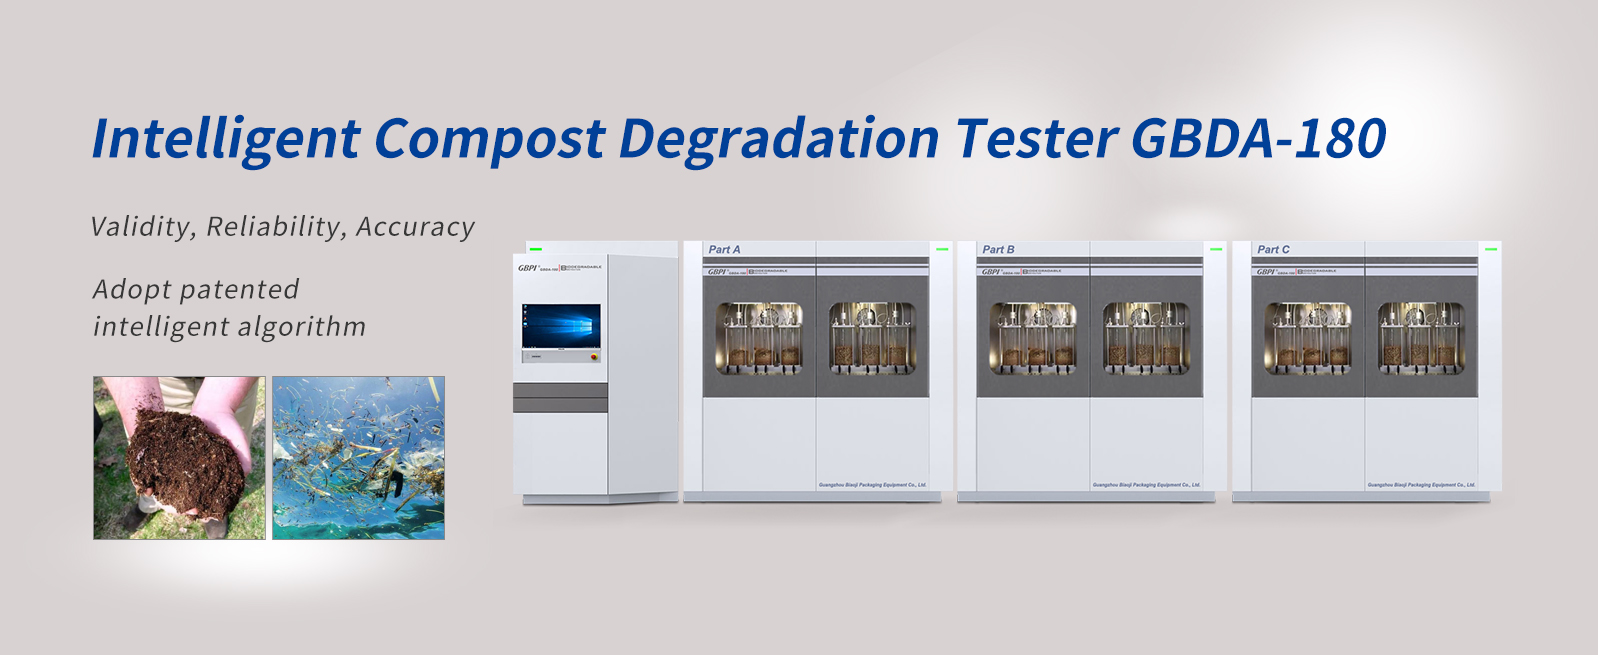 Intelligent Compost Degradation Tester GBDA-180